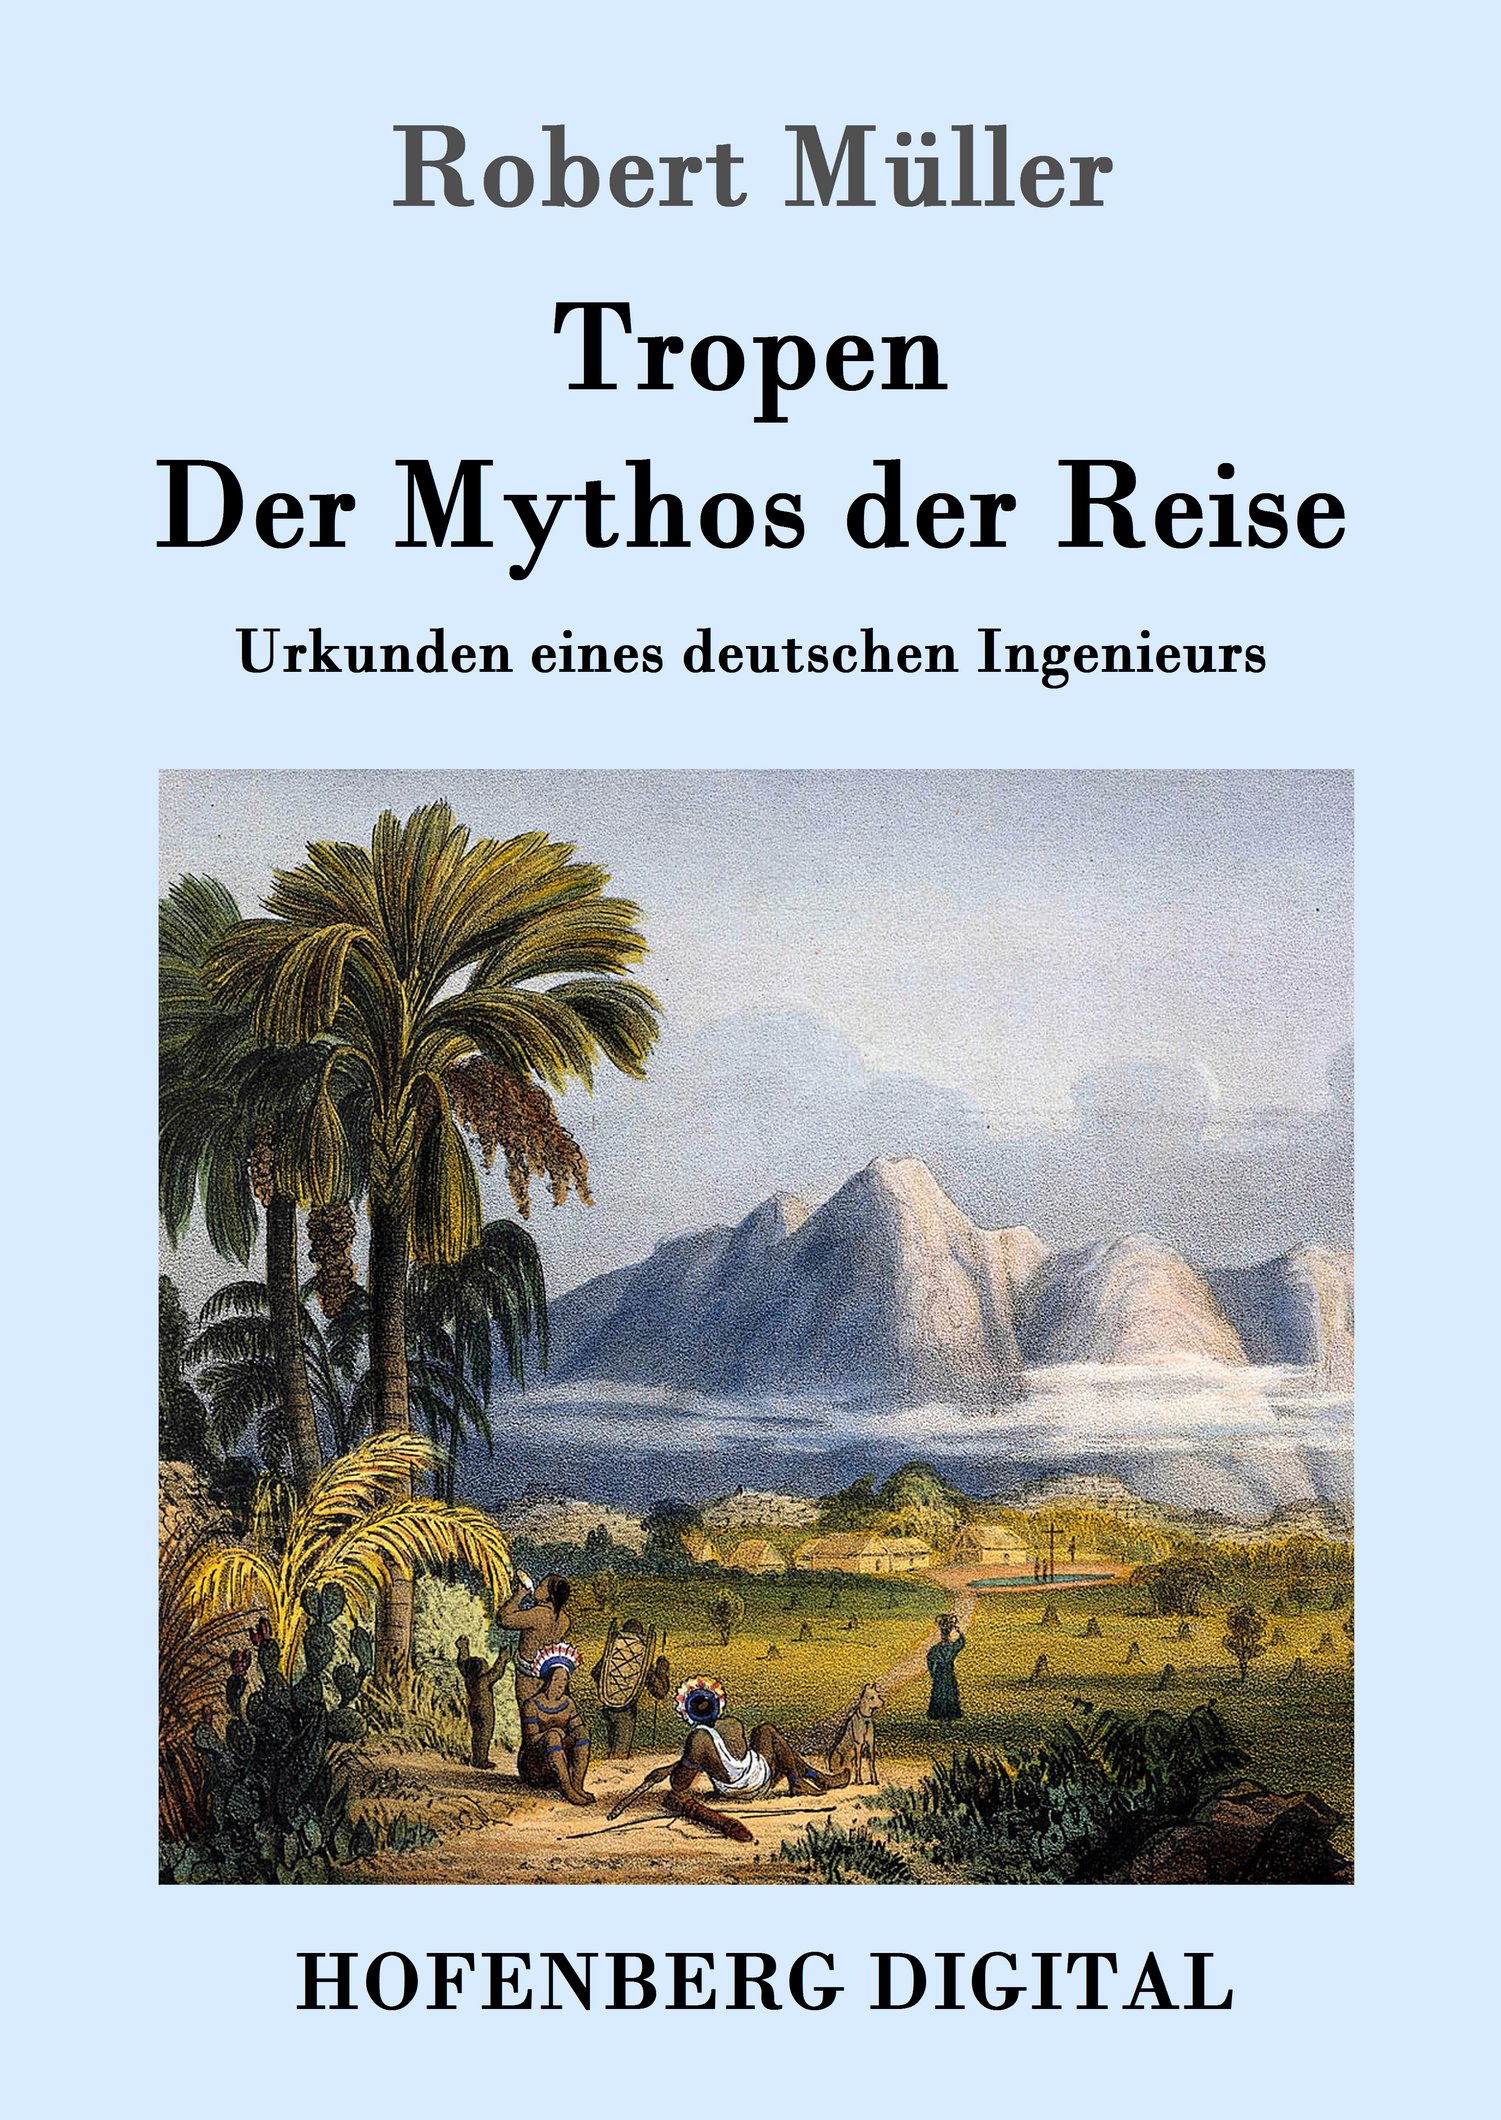 Robert Müller: Tropen. Der Mythos der Reise